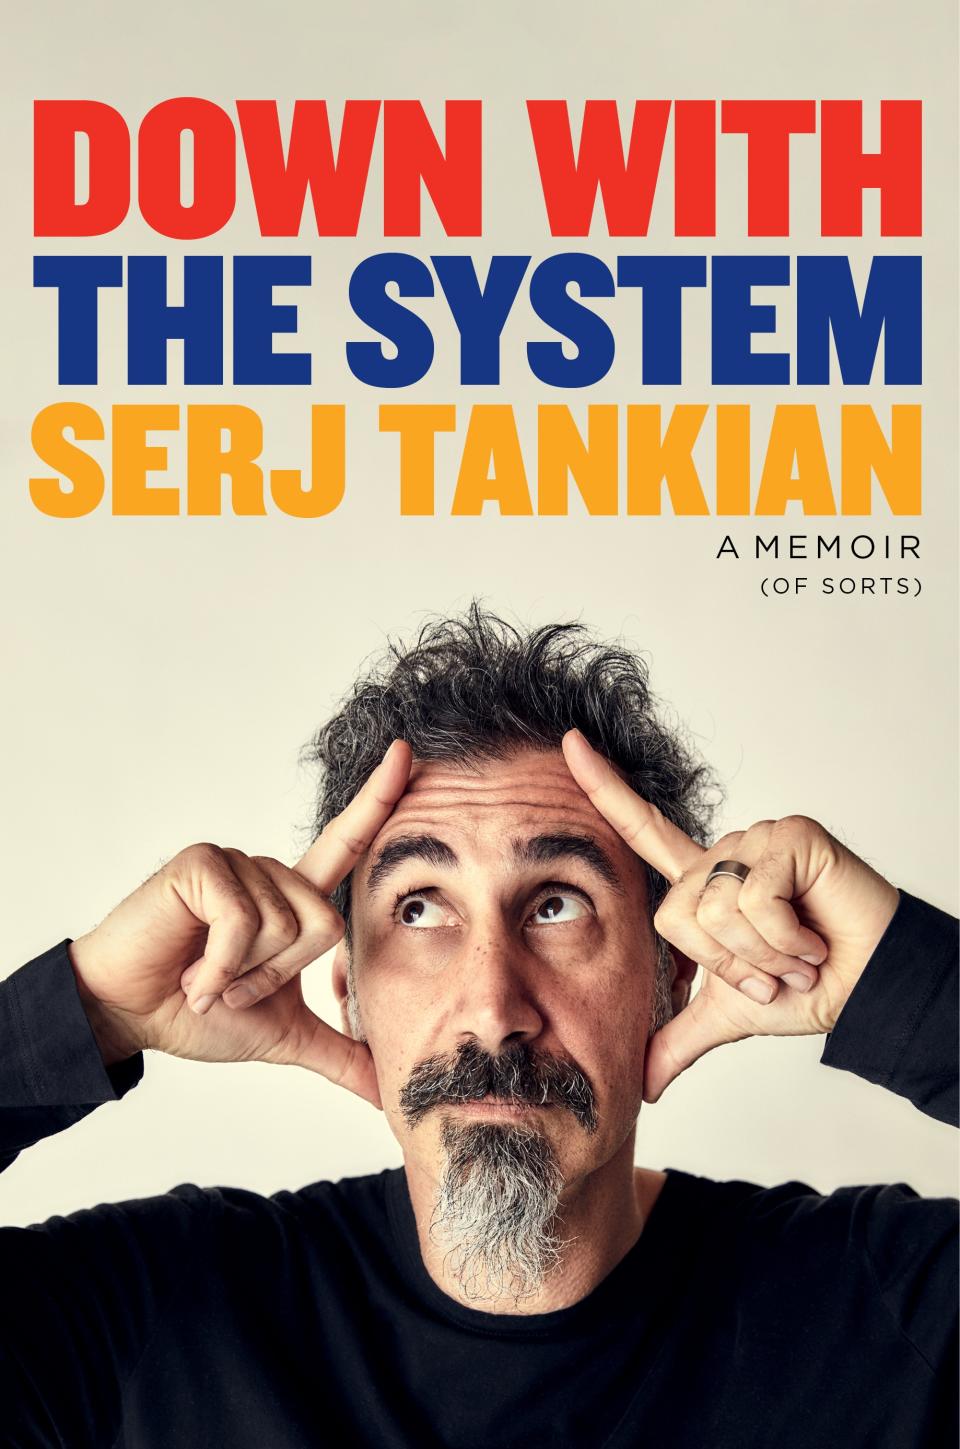 Serj Tankian's book